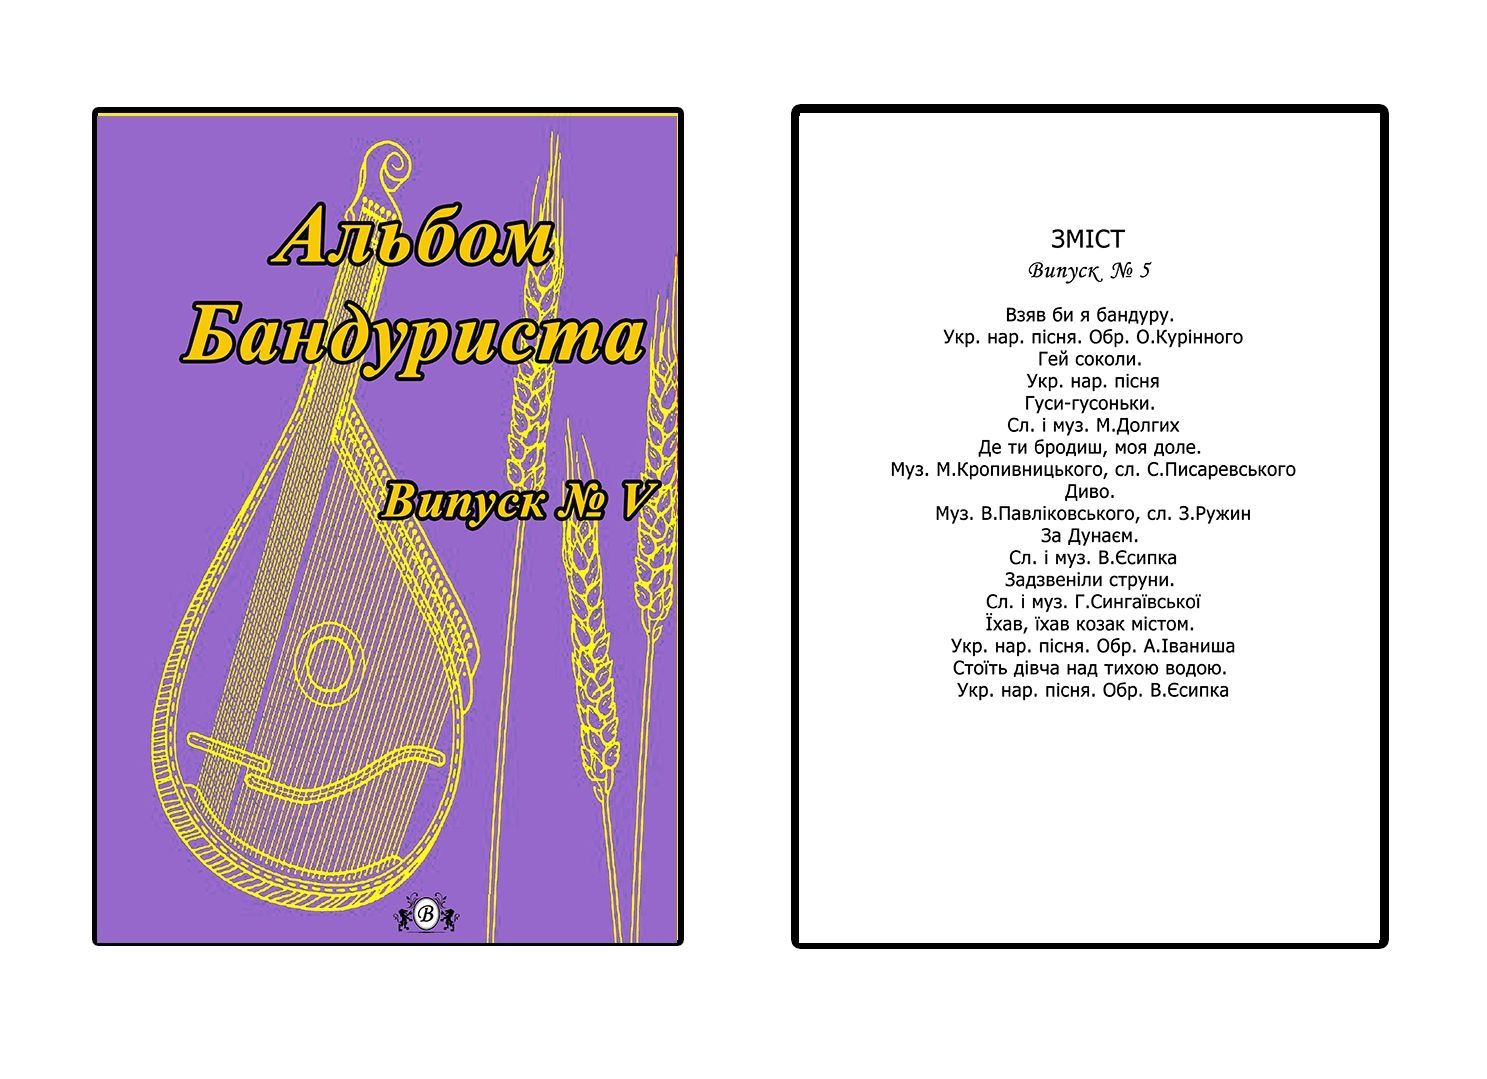 Ноти для Бандури
Альбом Бандуриста
1-2-3-4-5-6-7 выпуск. 
Для виклада